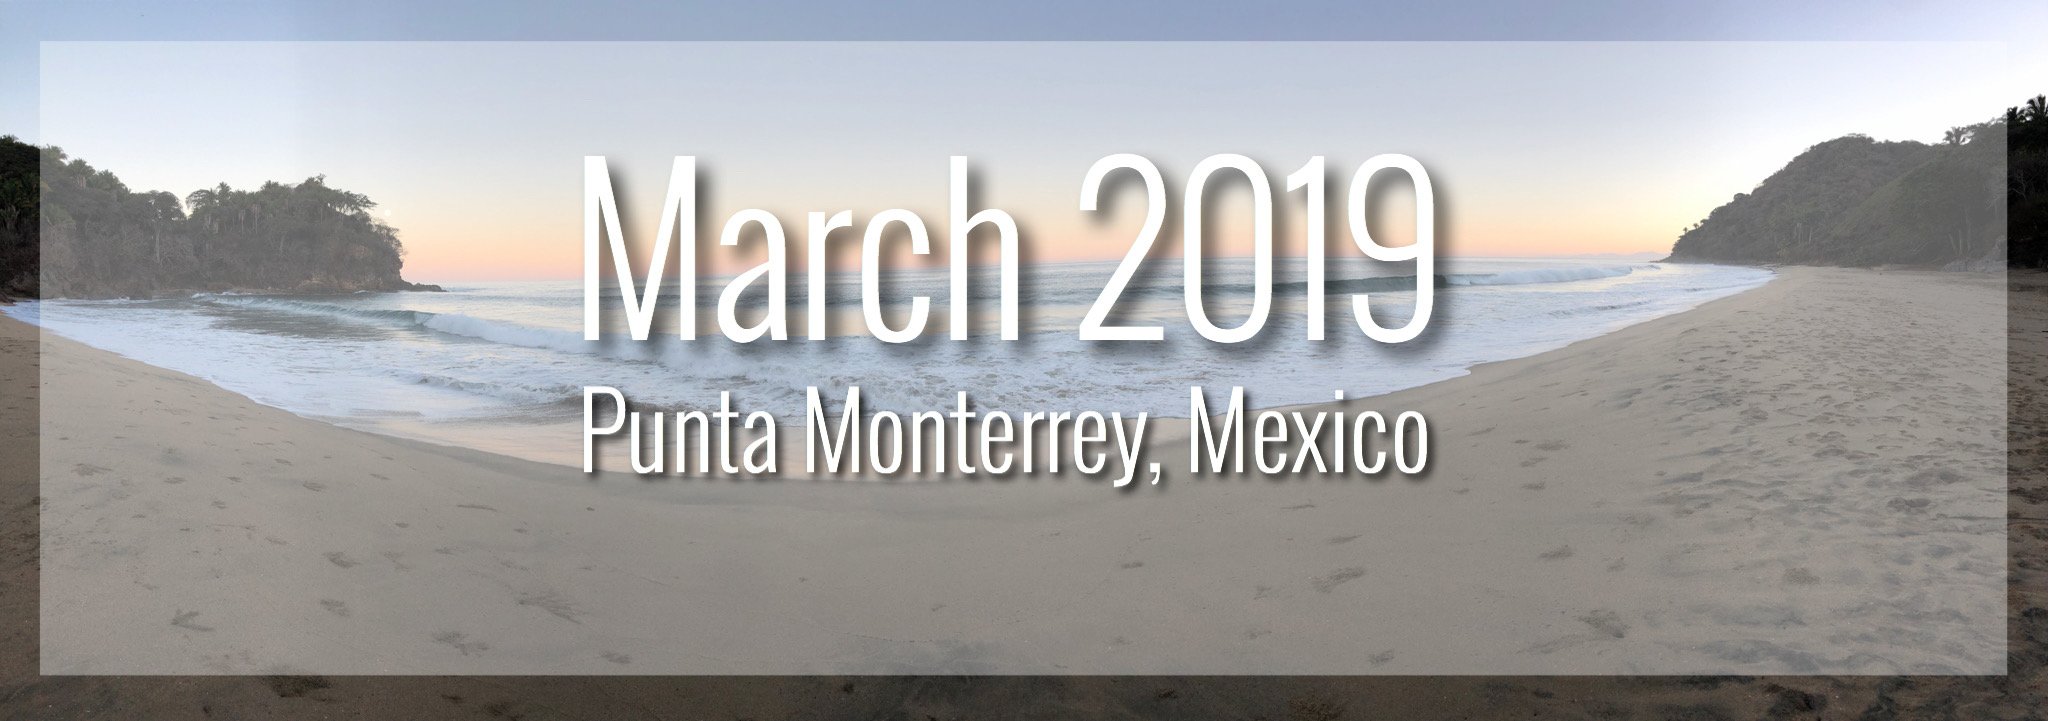 2019 Punta Monterrey Cover.JPG